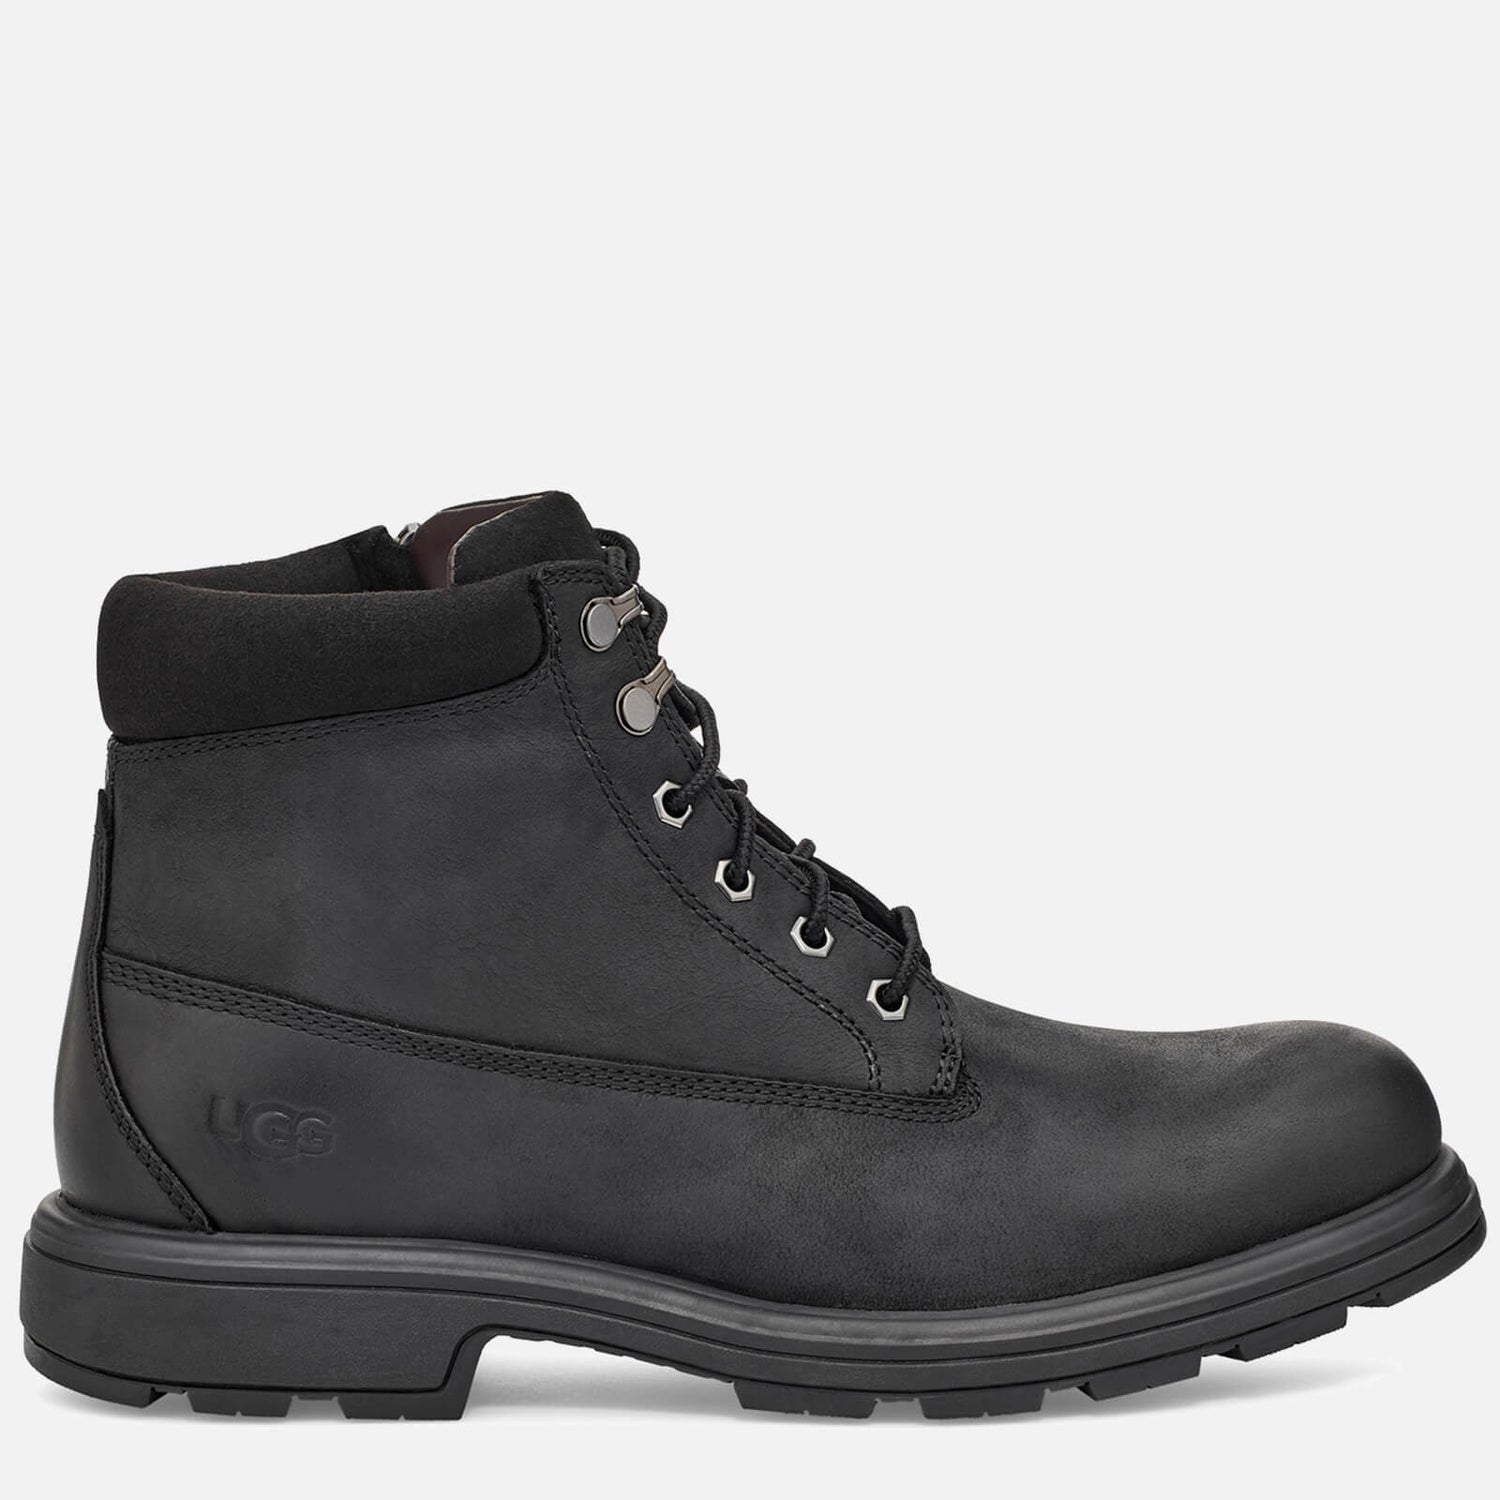 UGG Men's Biltmore Waterproof Leather Mid Boots - Black | TheHut.com